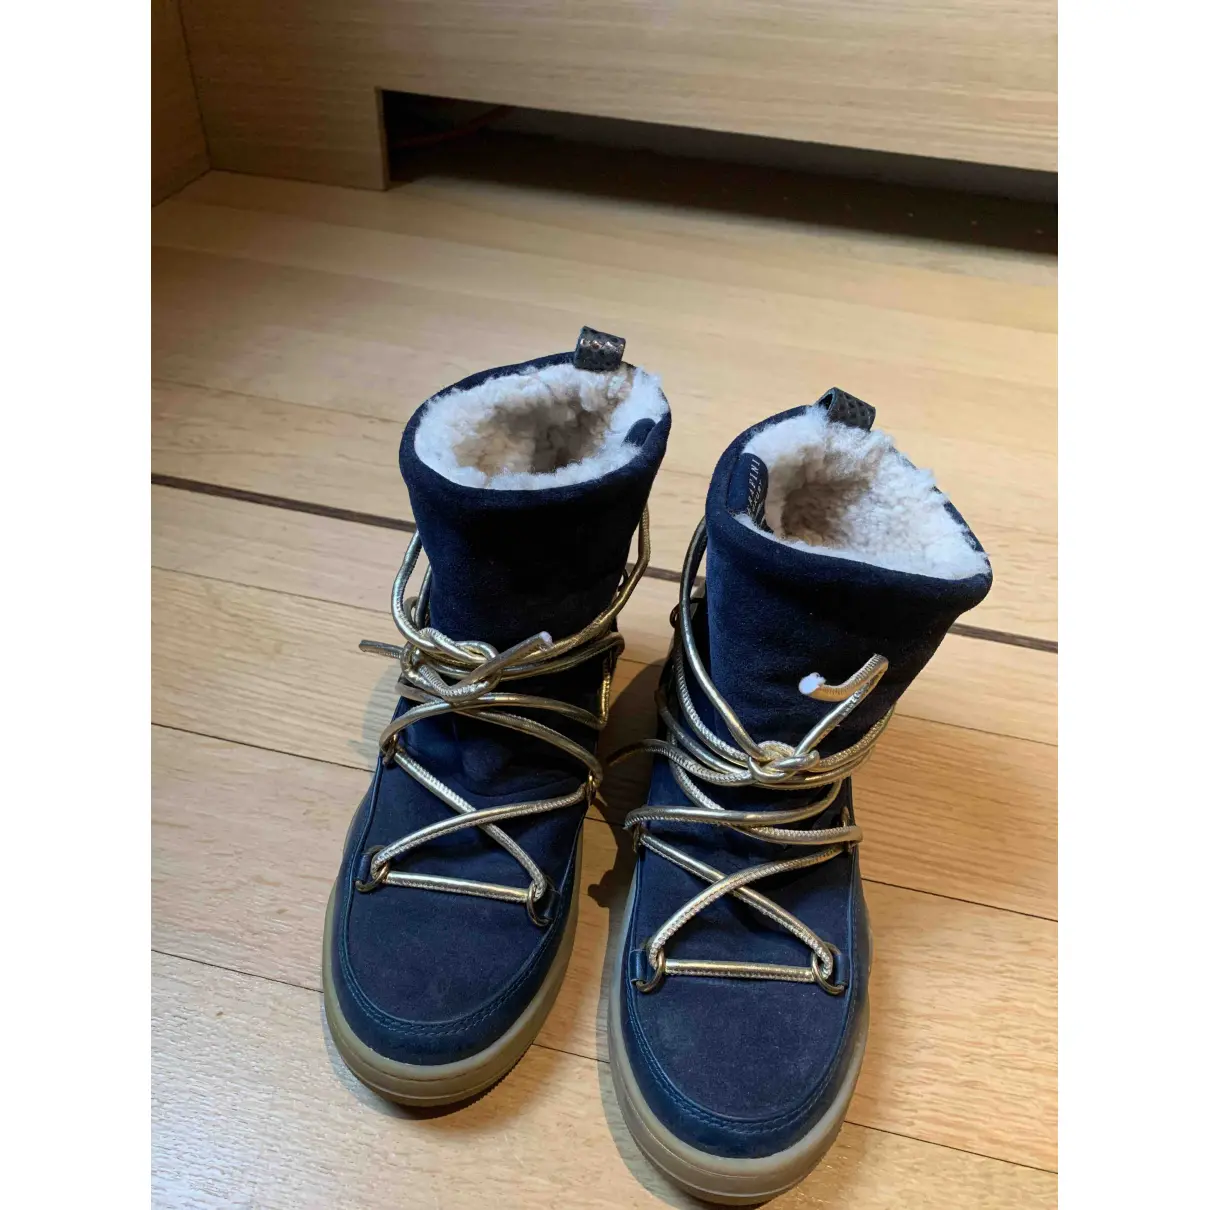 Buy Serafini Snow boots online